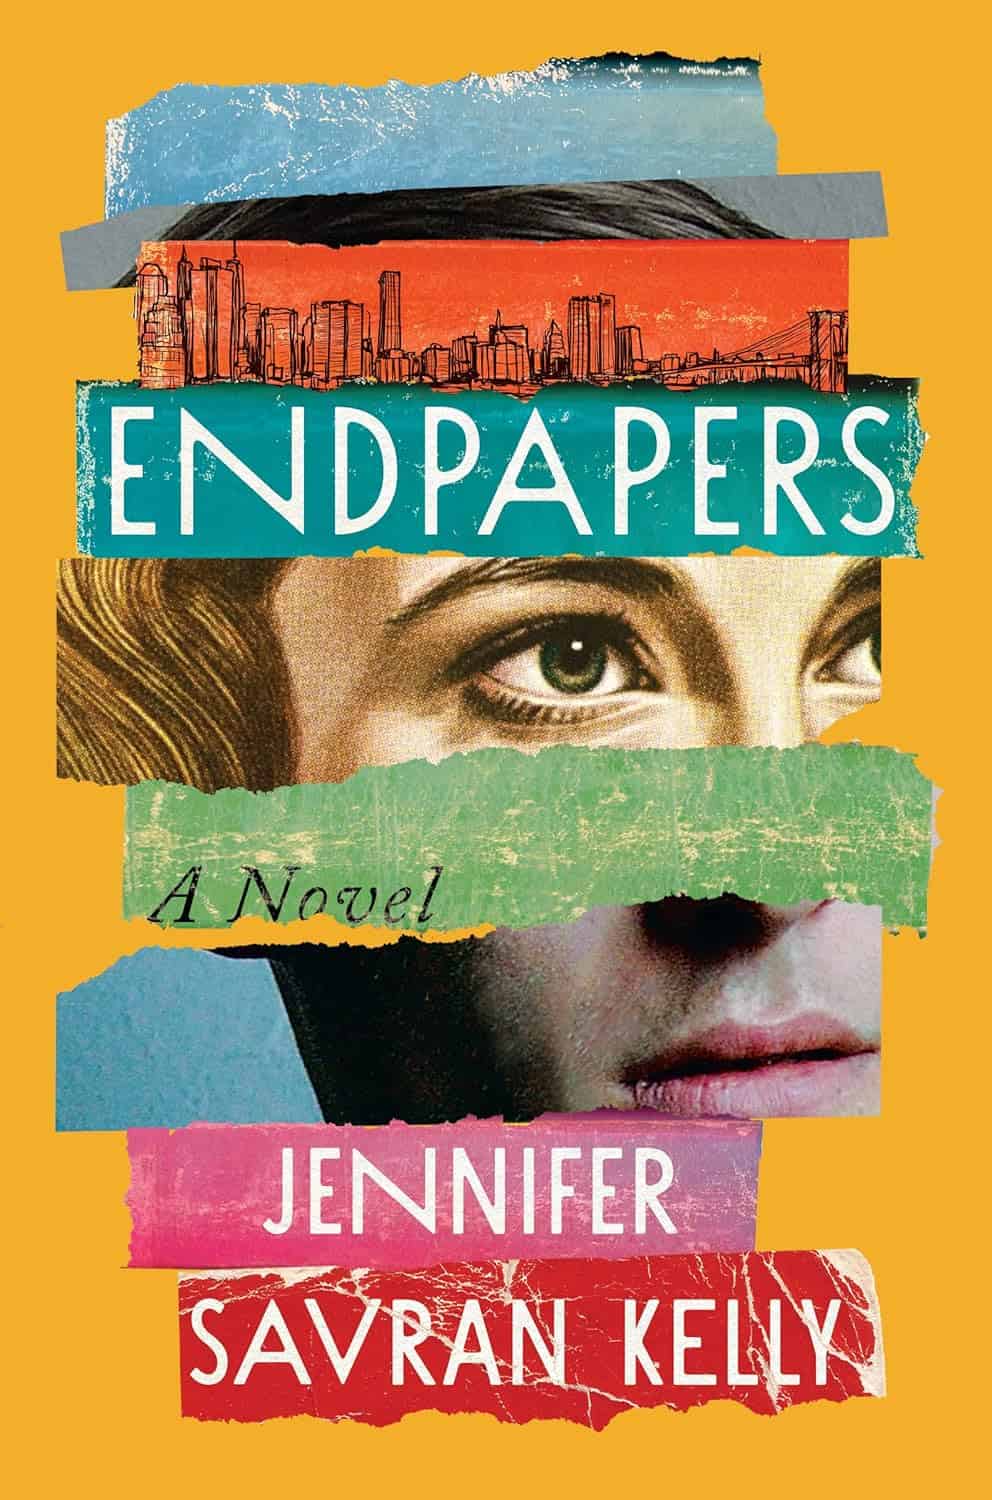 Endpapers, by Jennifer Savran Kelly